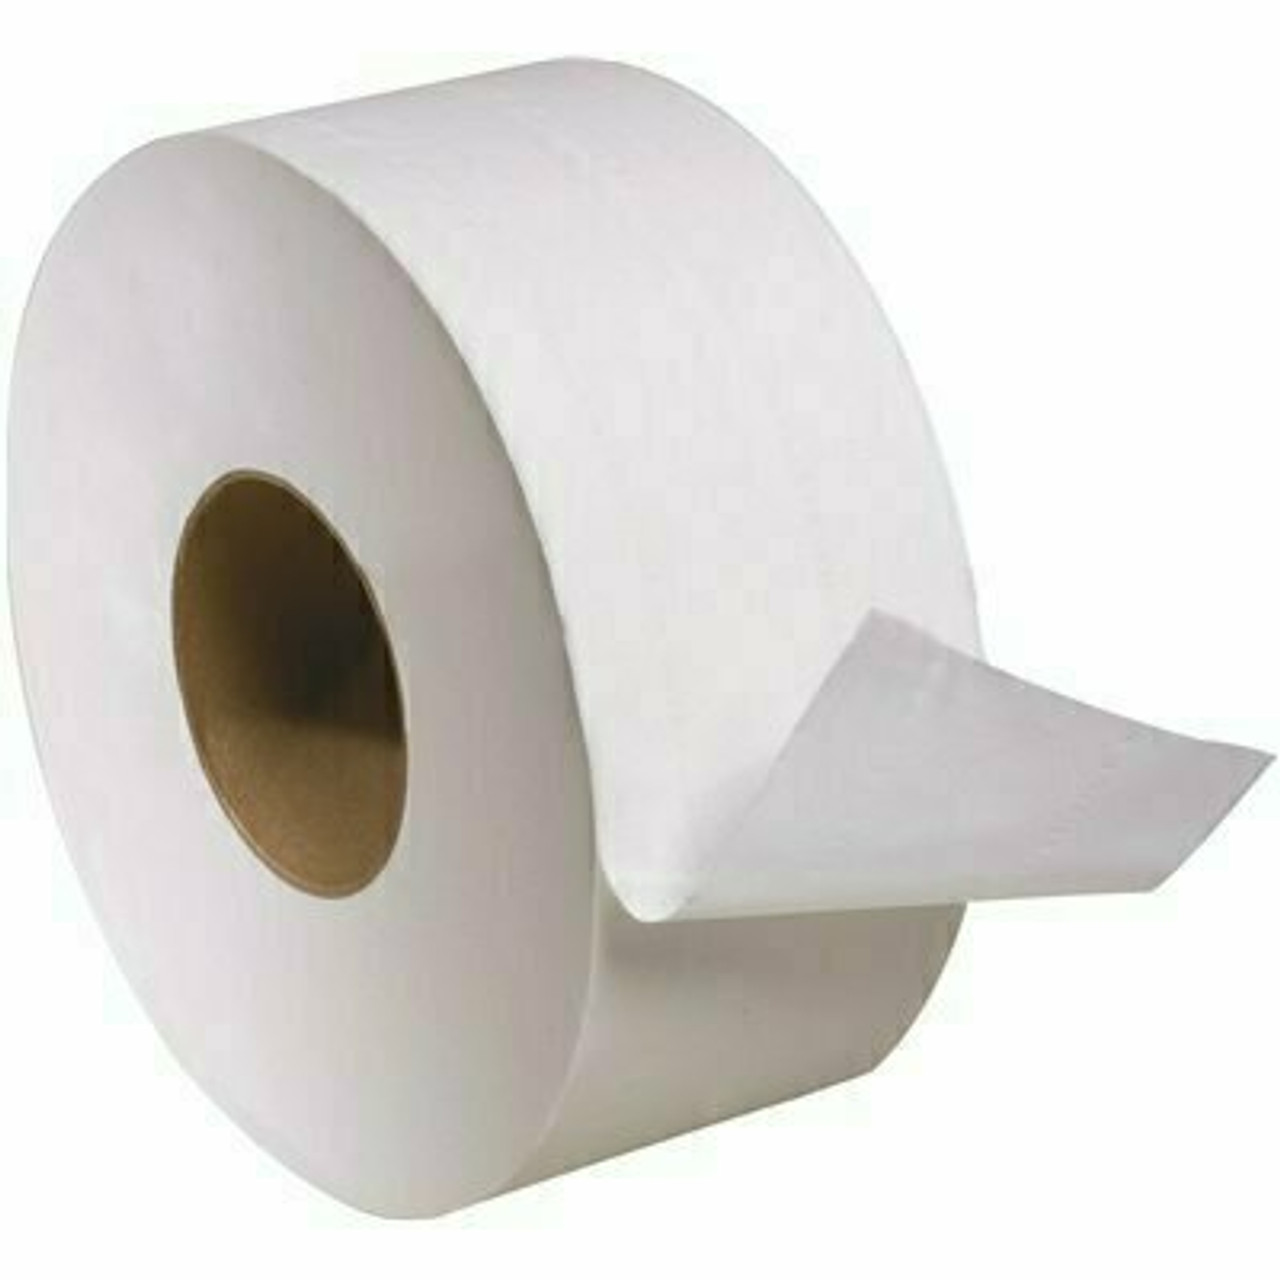 Renown Jumbo Roll 2-Ply 3.48 in. Toilet Paper (1,000 ft. per Roll 12 Rolls per Case)